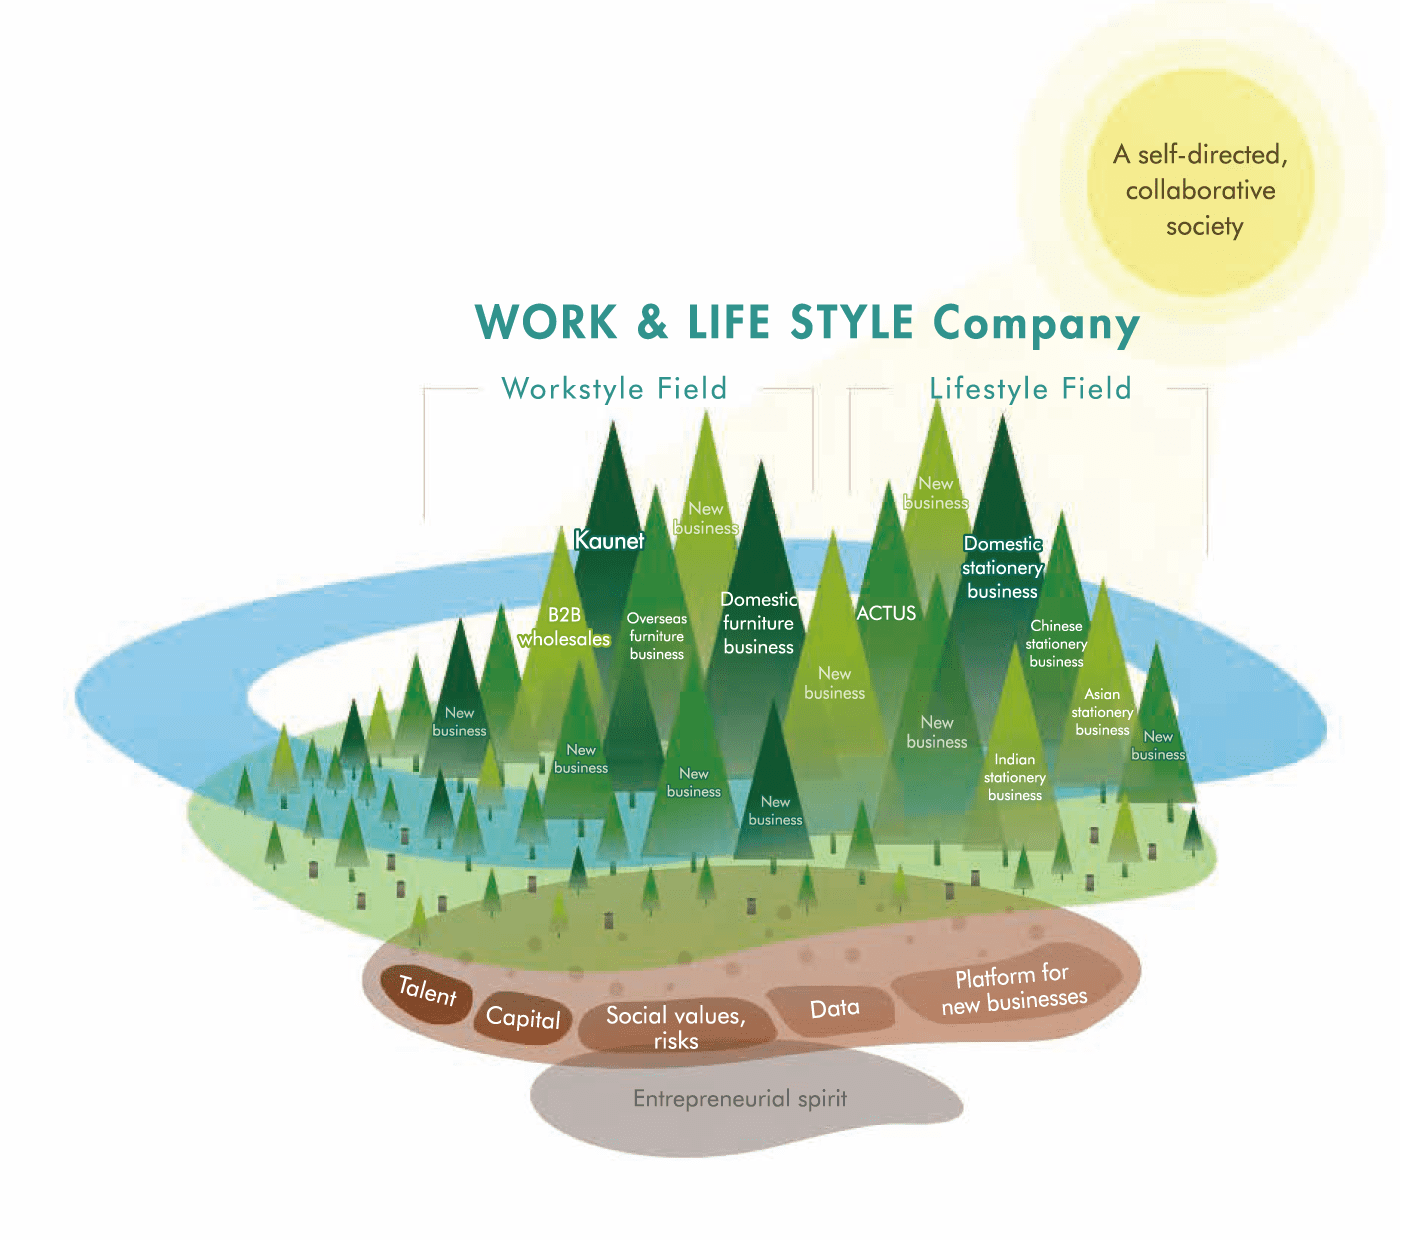 WORK & LIFE STYLE Company